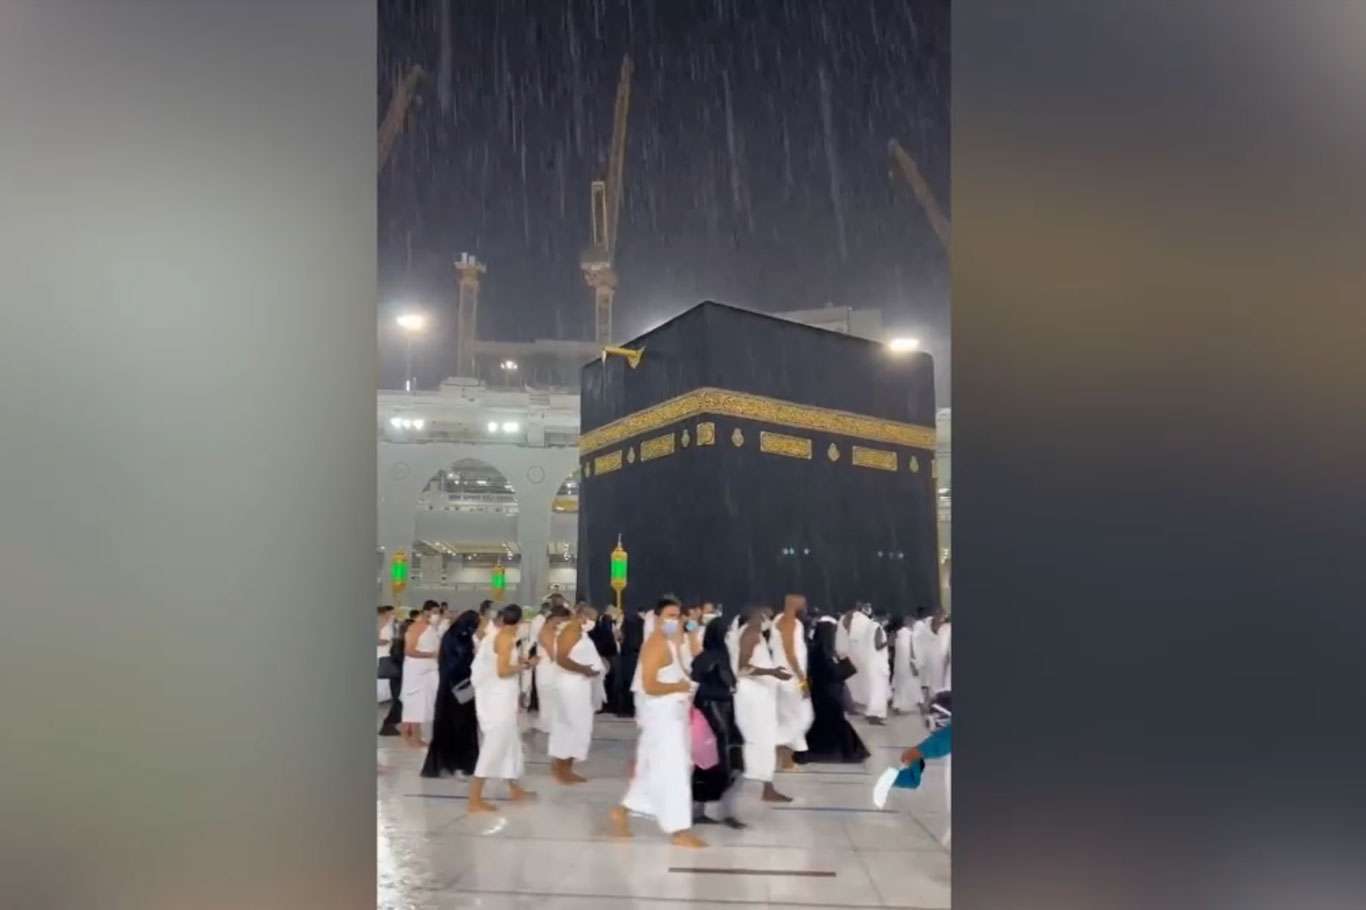 Pilgrims showered with rainfall during heavy rain in Mecca